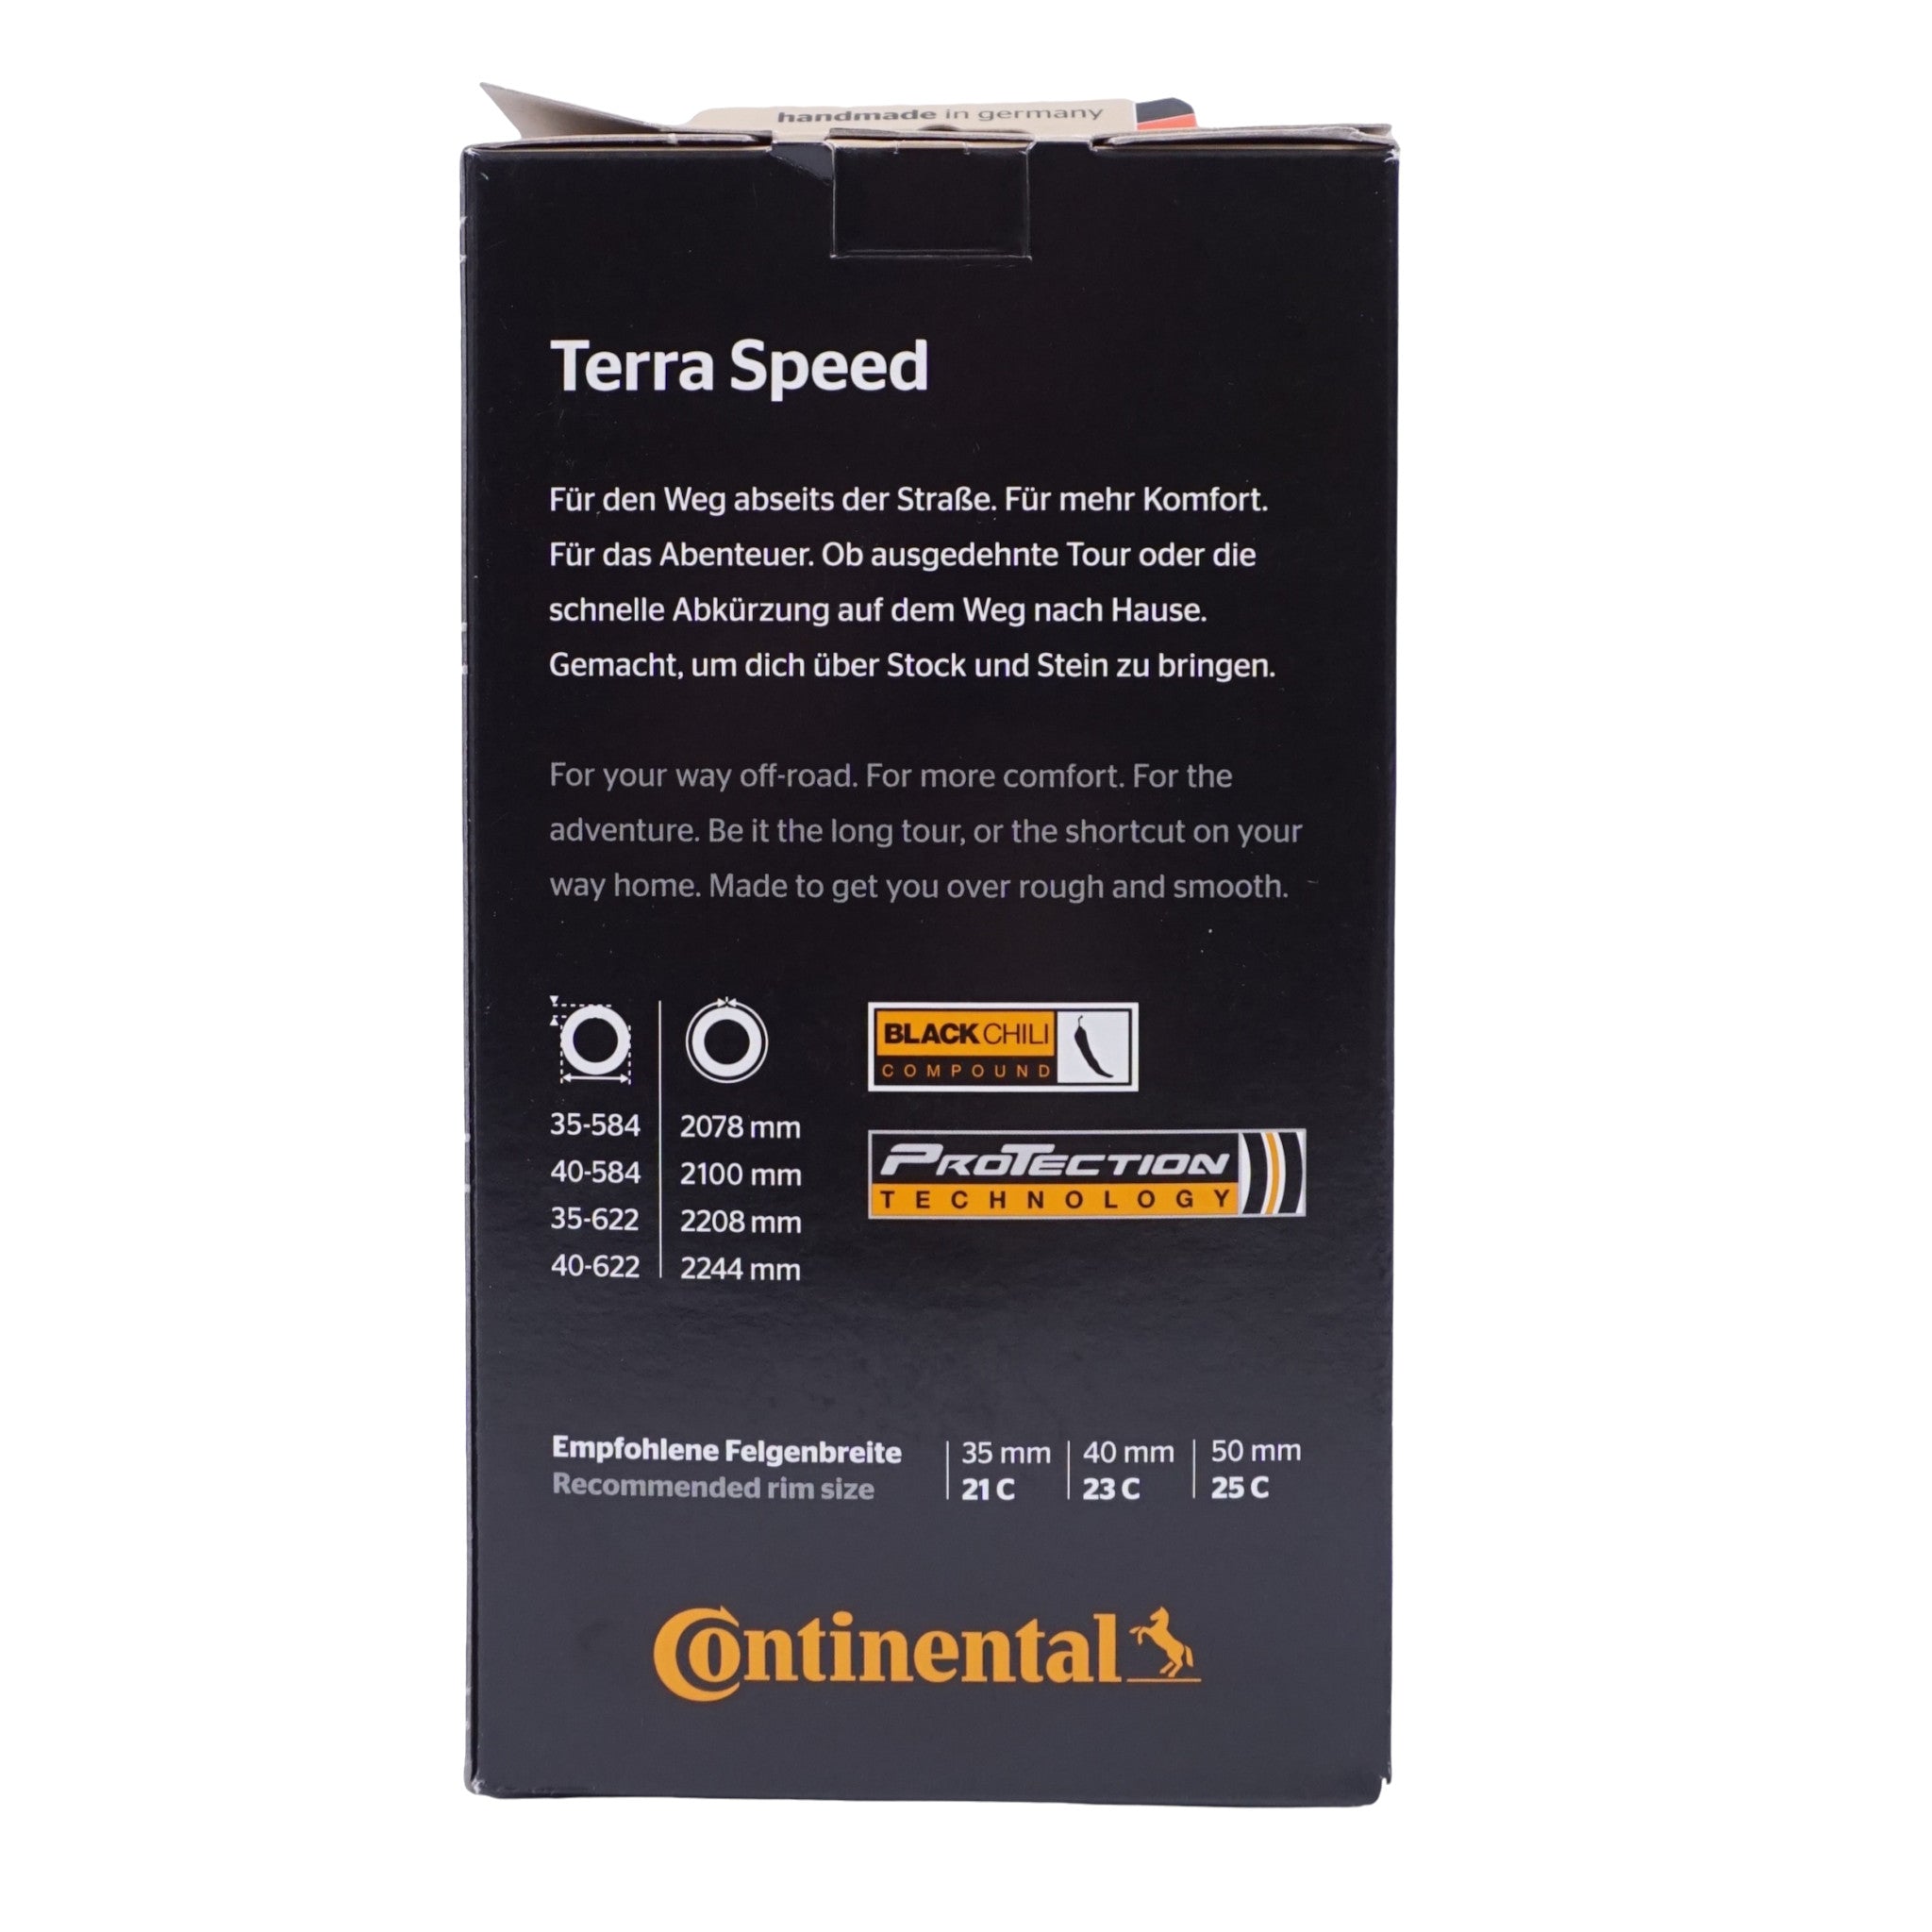 Continental Terra Speed 700c Tubeless BlackChili ProTection Black/Tan Tire - The Bikesmiths